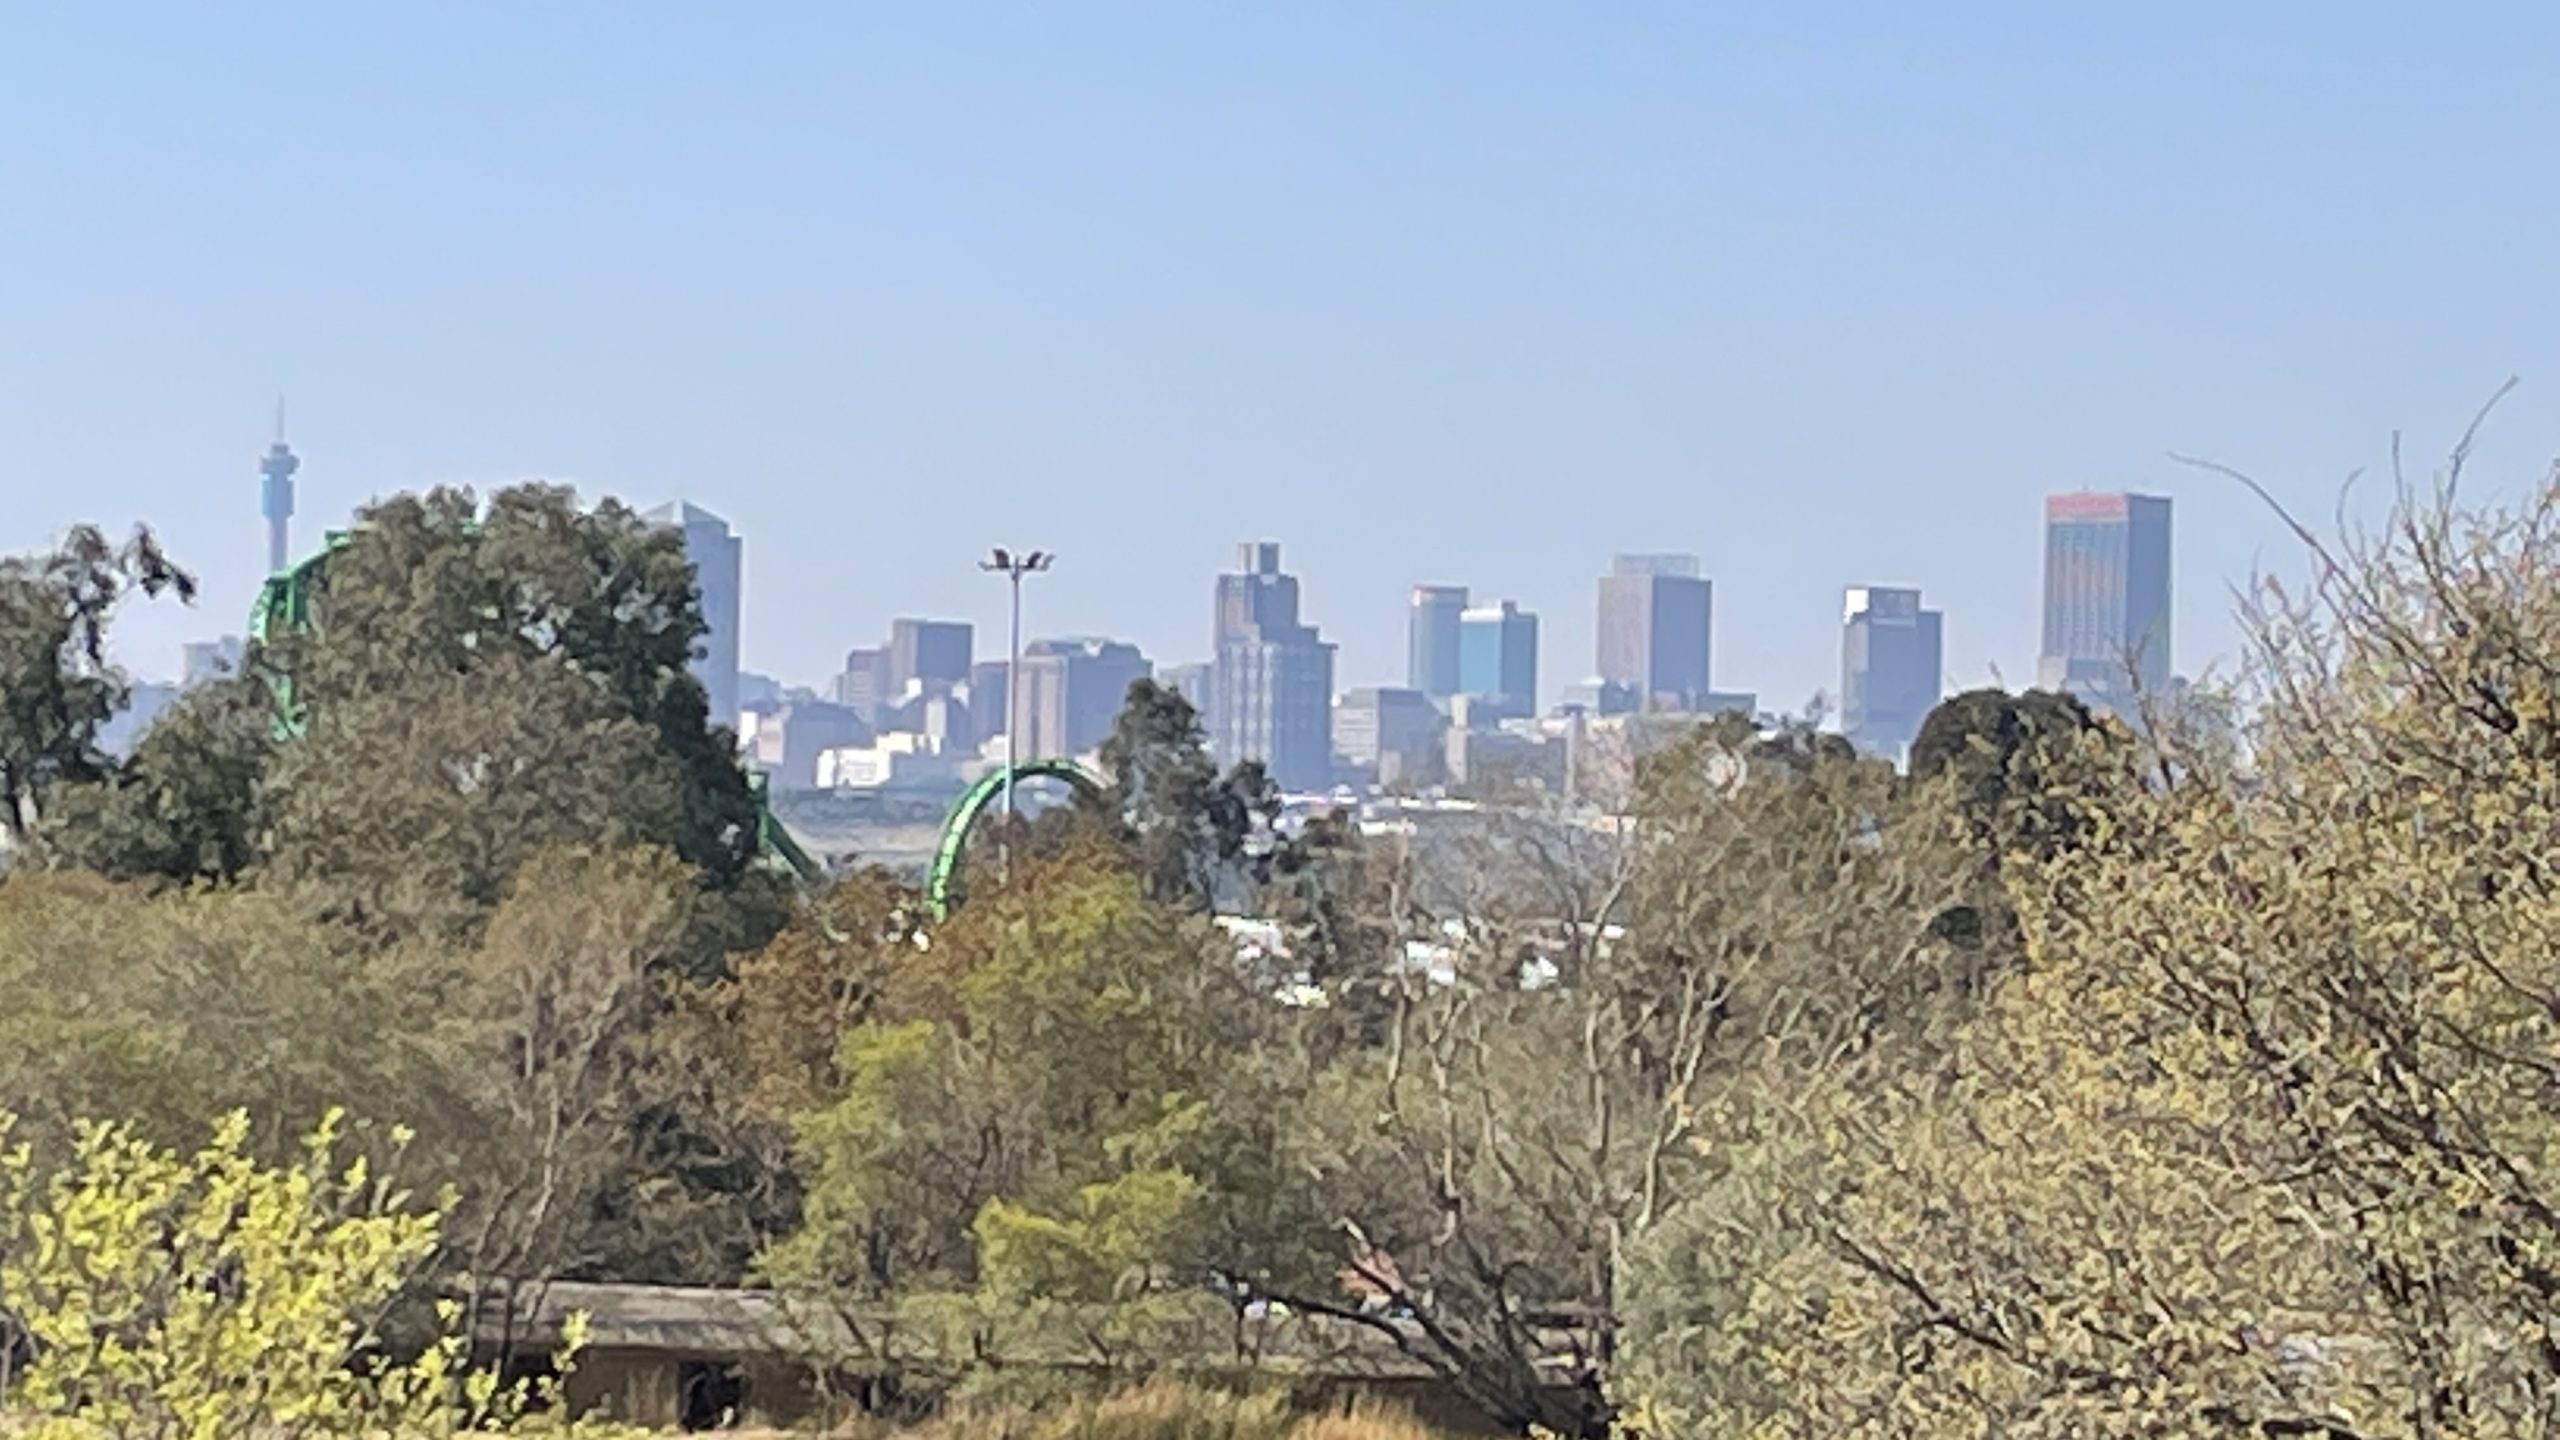 TripADeal South Africa Johannesburg skyline.